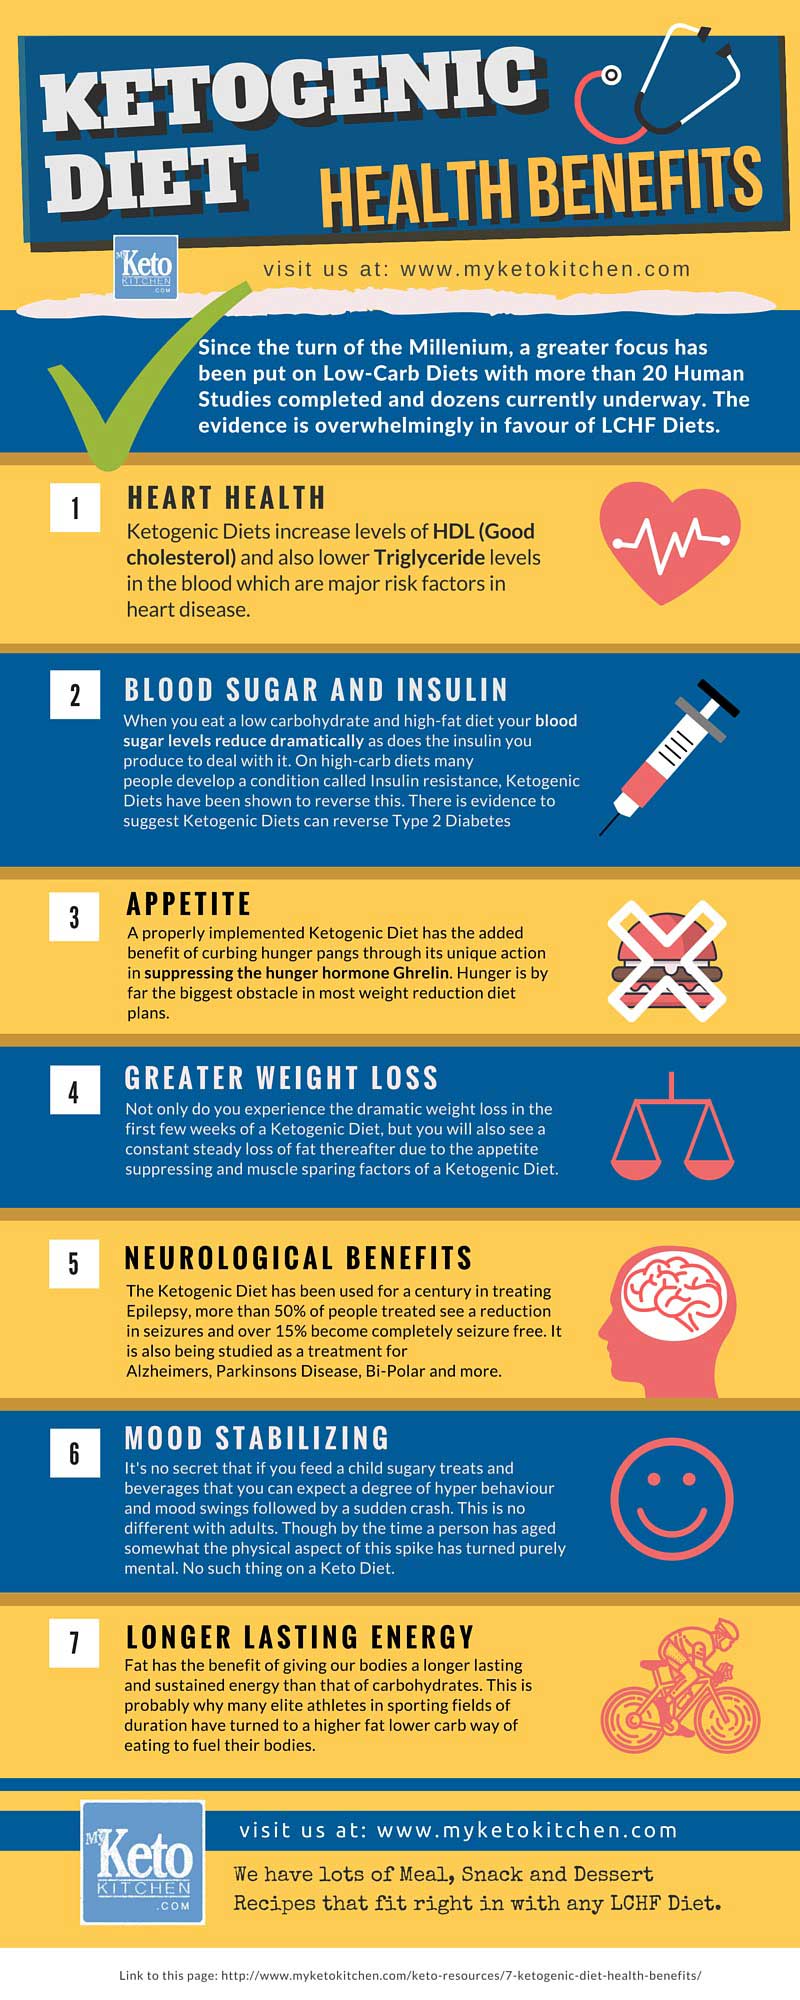 Ketogenic-Diet-Health-Benefits-infographic-my-keto-kitchen.jpg